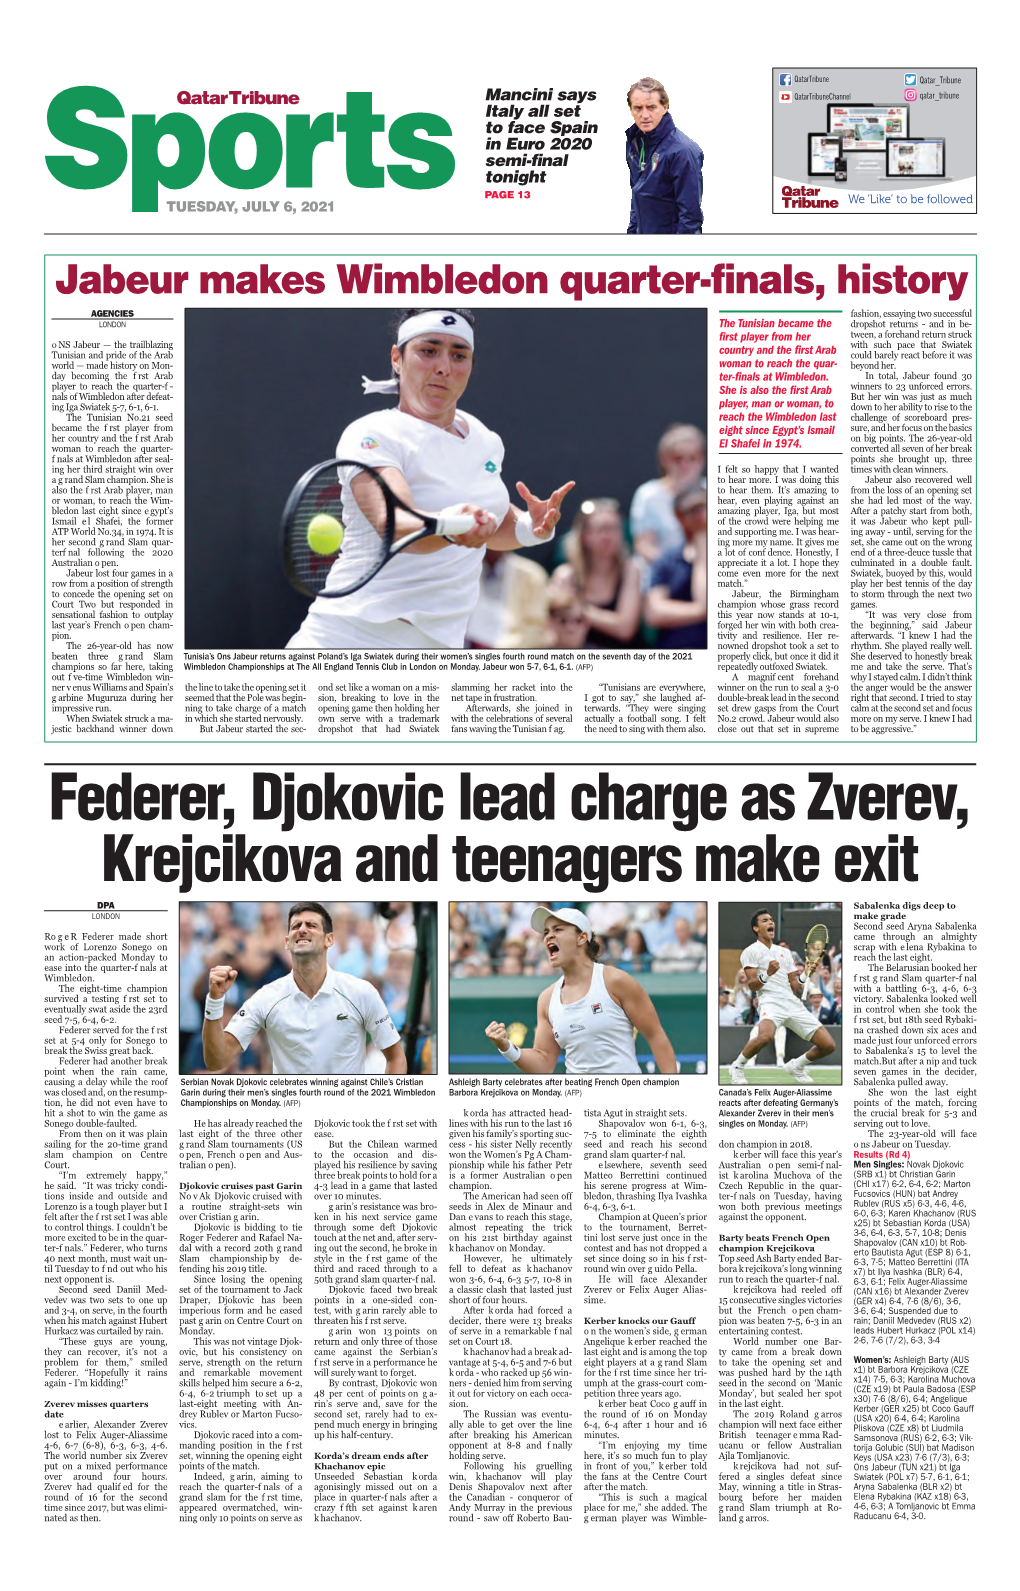 Federer, Djokovic Lead Charge As Zverev, Krejcikova and Teenagers Make Exit